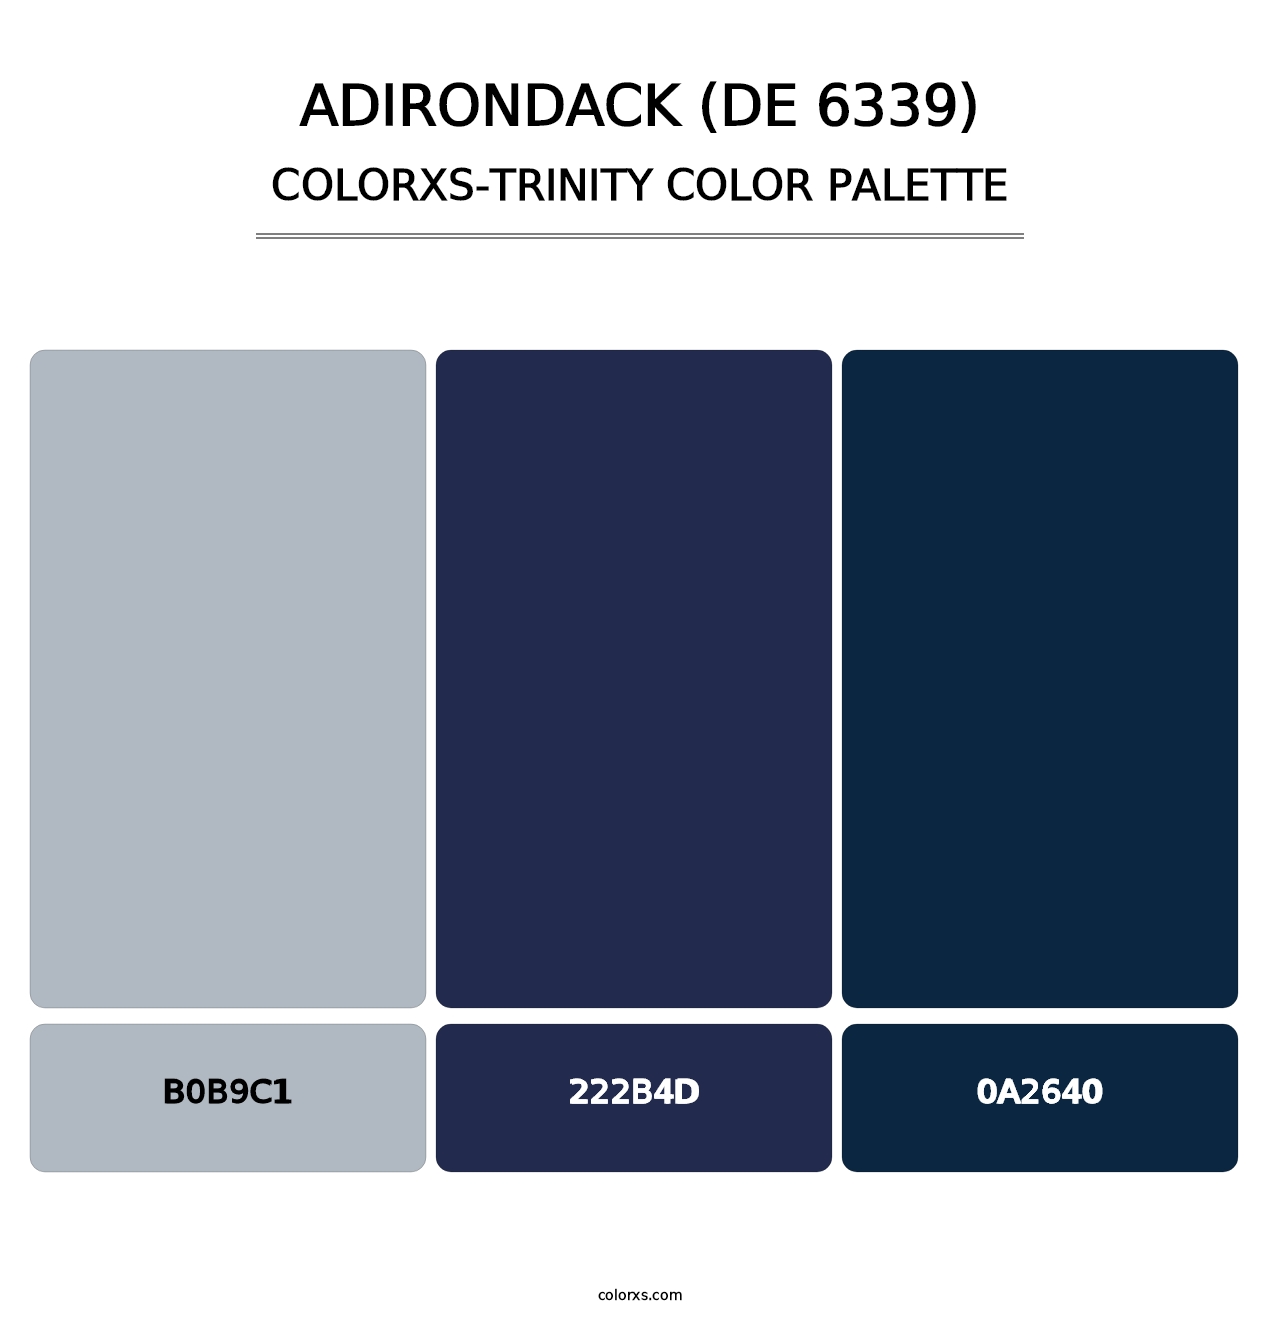 Adirondack (DE 6339) - Colorxs Trinity Palette